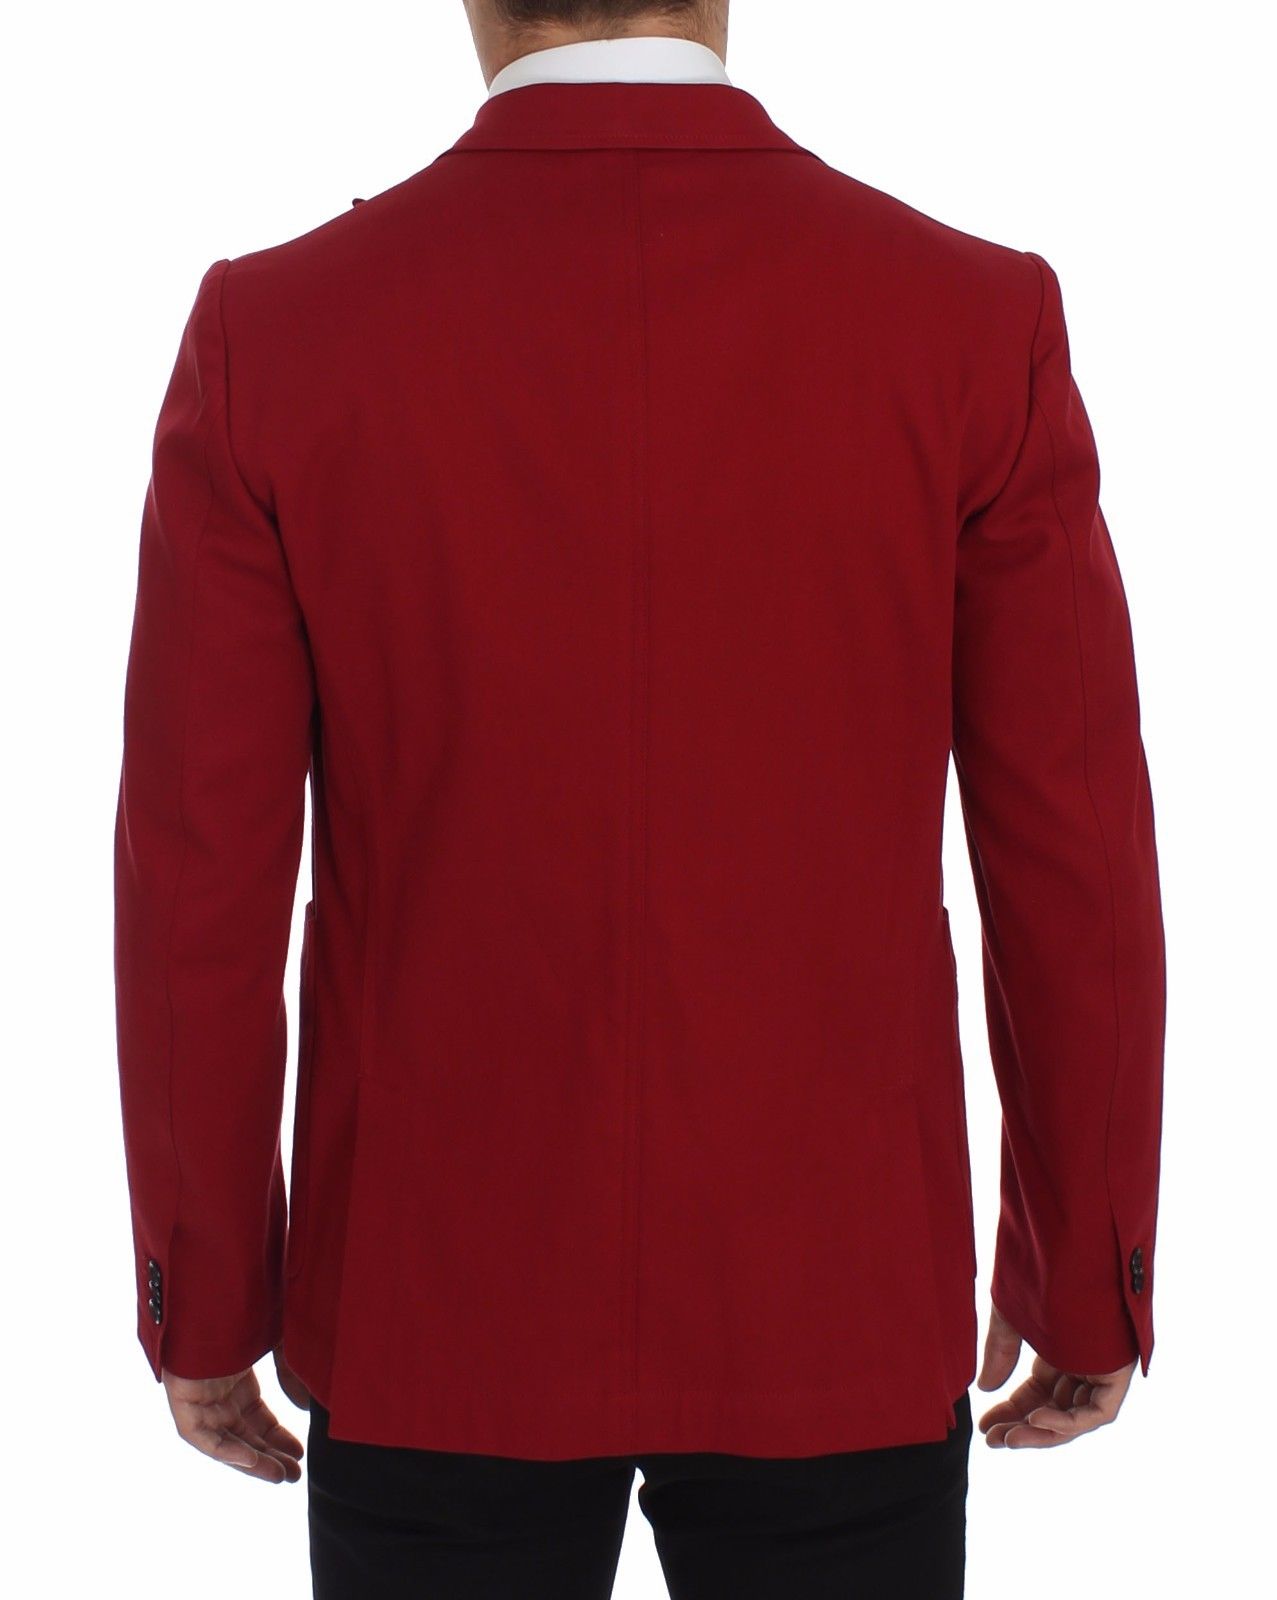 Elegant Red Cotton Stretch Two-Button Blazer